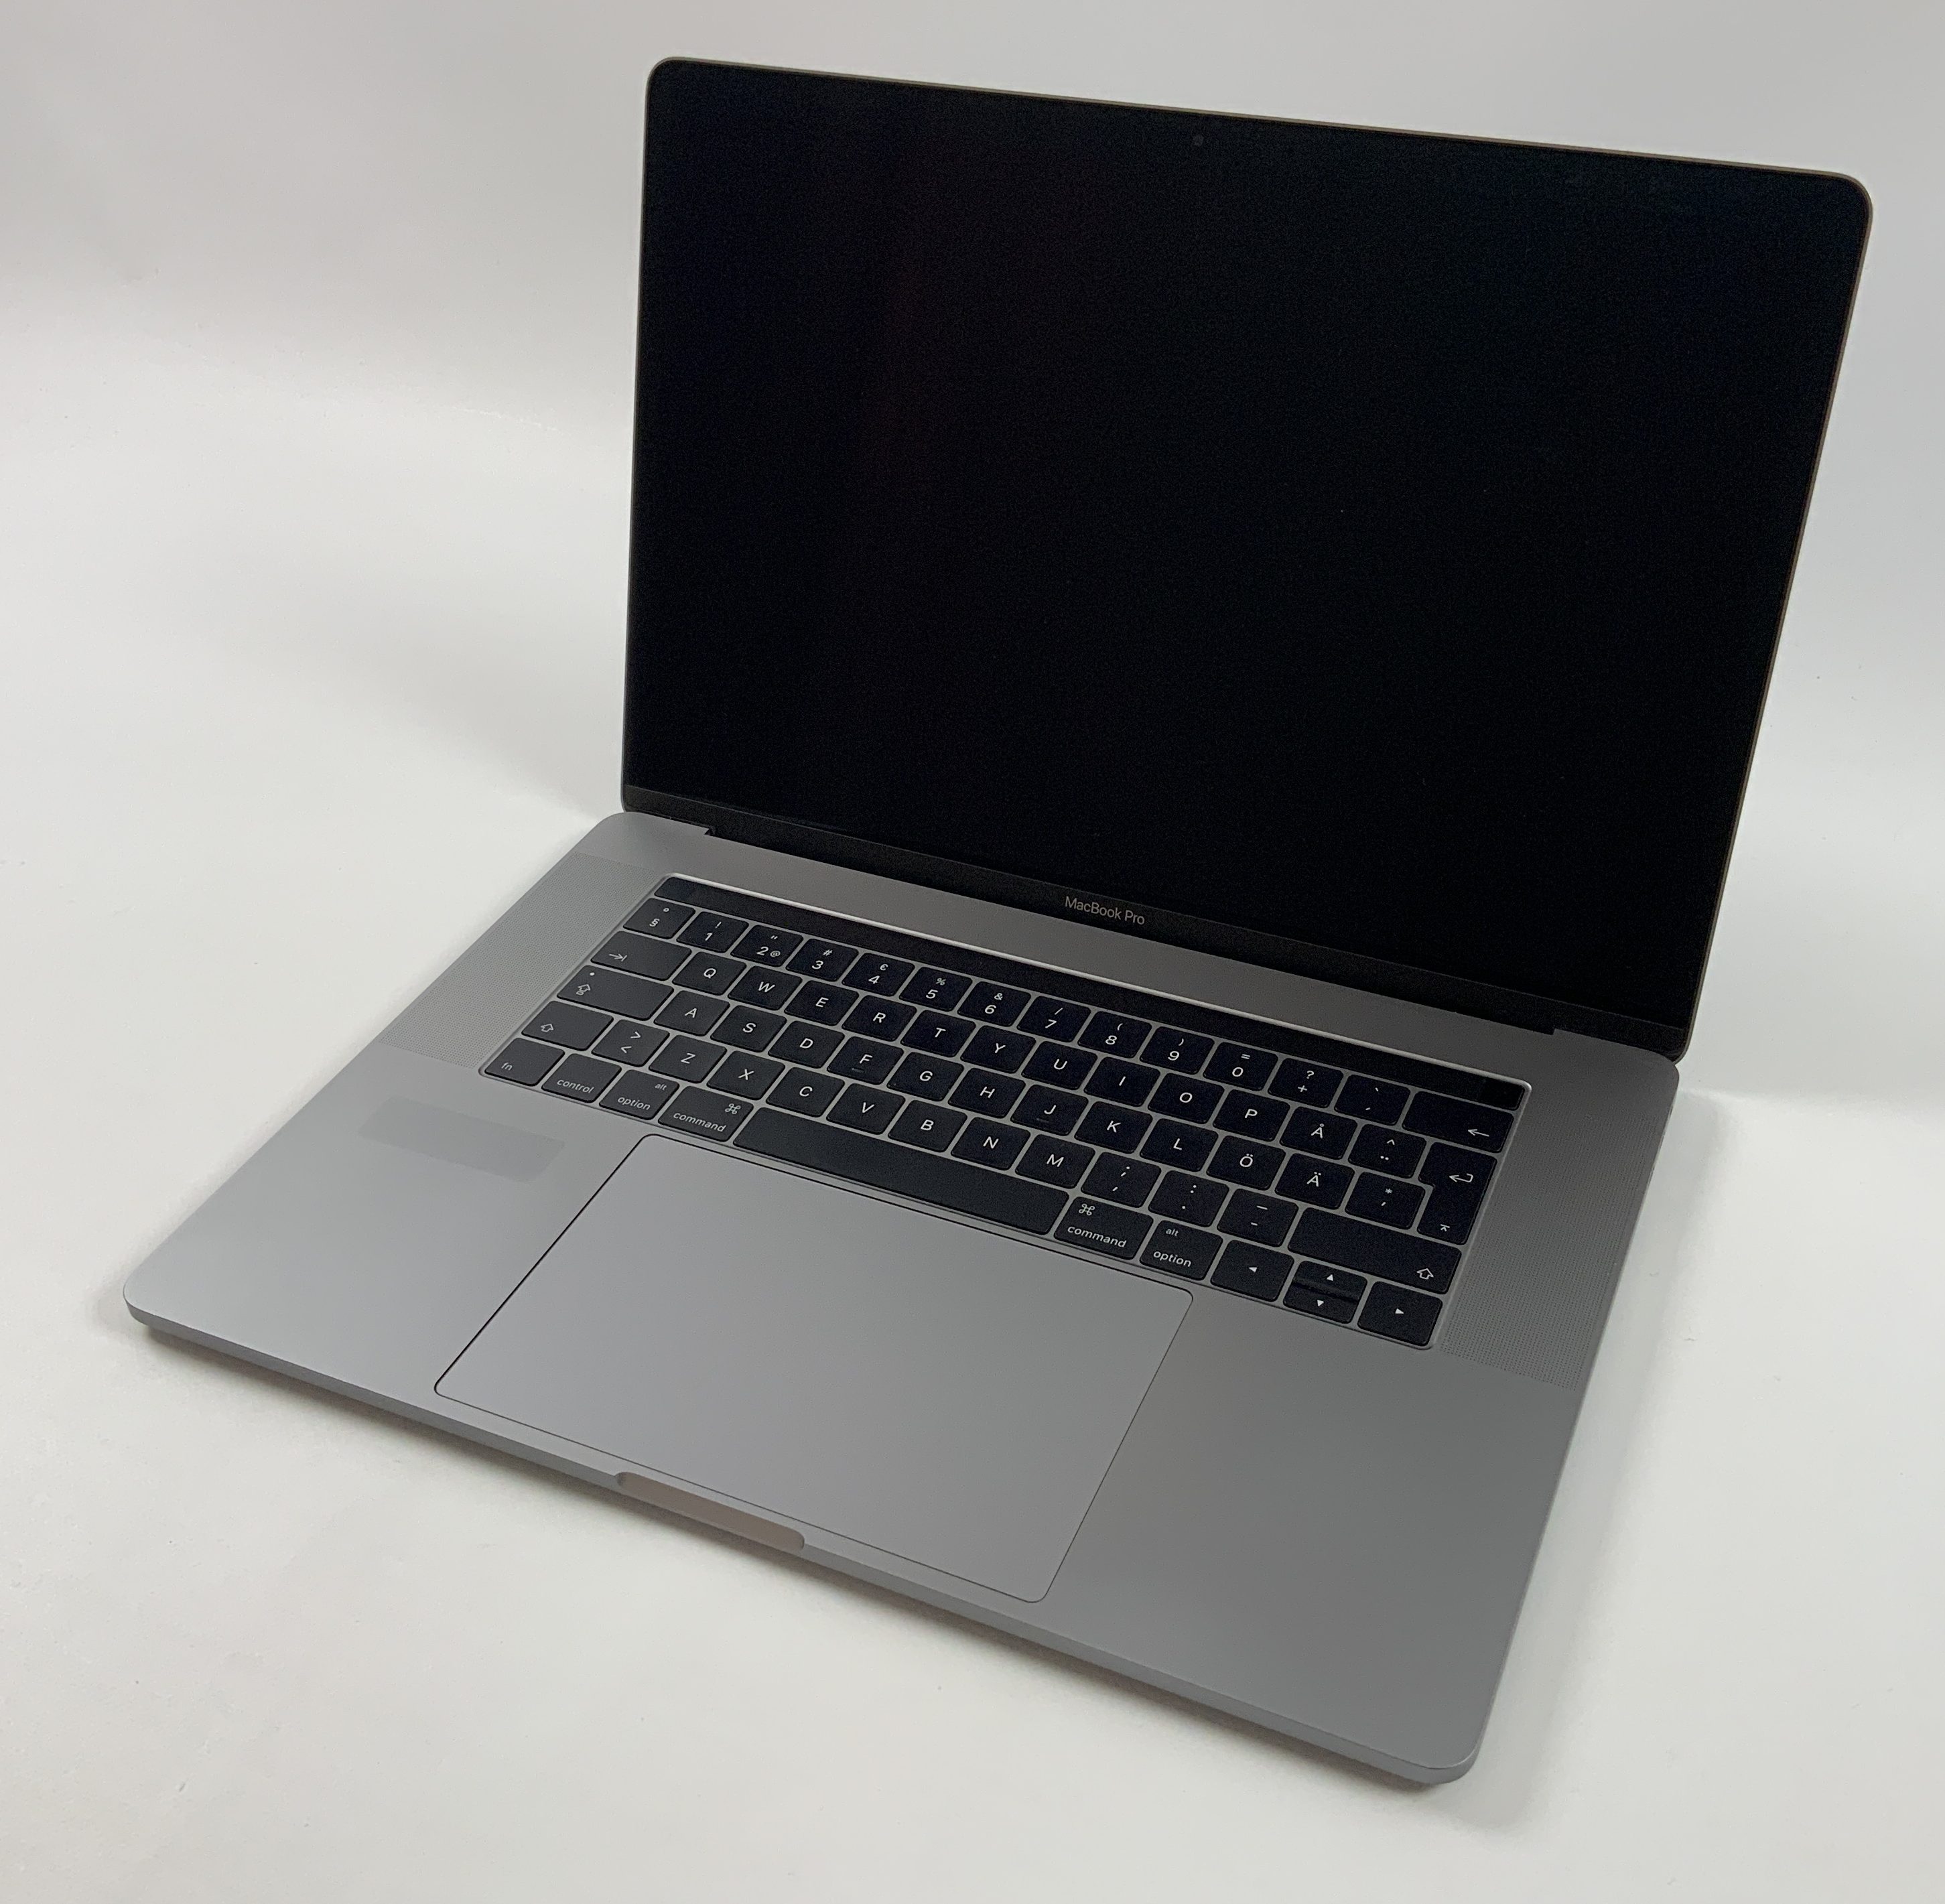 MacBook Pro 15" Touch Bar Late 2016 (Intel Quad-Core i7 2.6 GHz 16 GB RAM 256 GB SSD), Space Gray, Intel Quad-Core i7 2.6 GHz, 16 GB RAM, 256 GB SSD, imagen 1